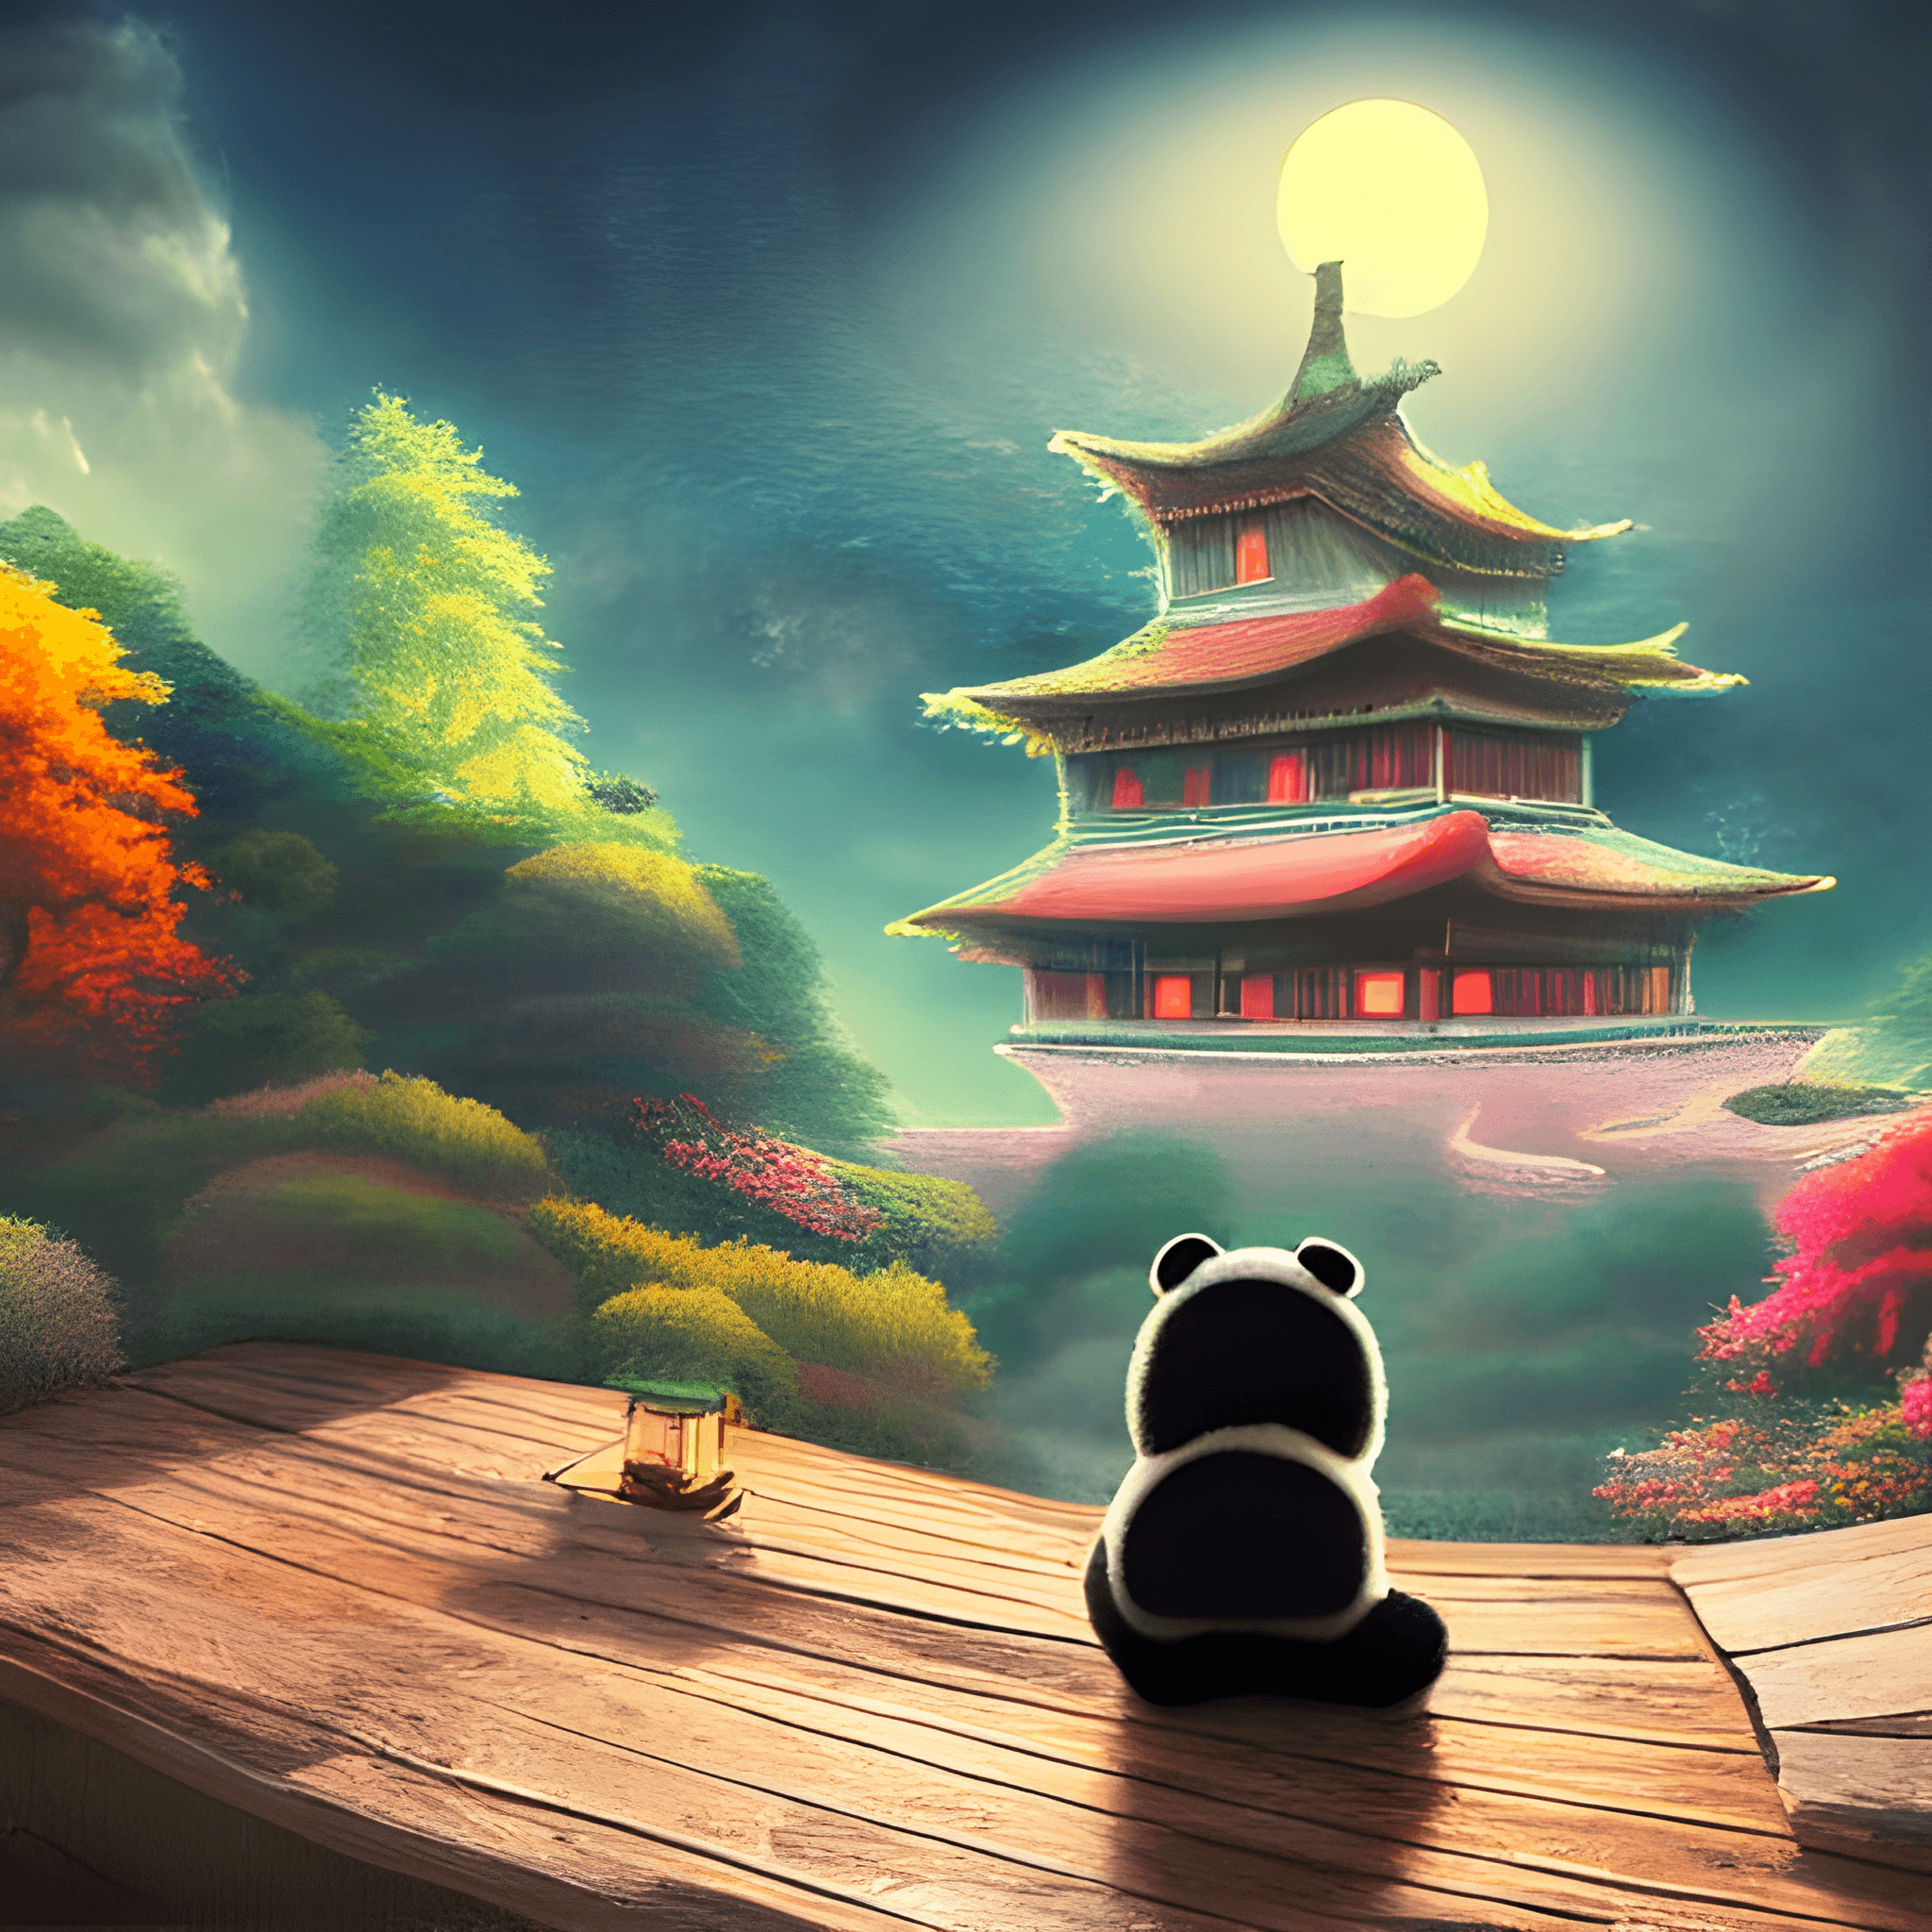 panda's journey #day.25